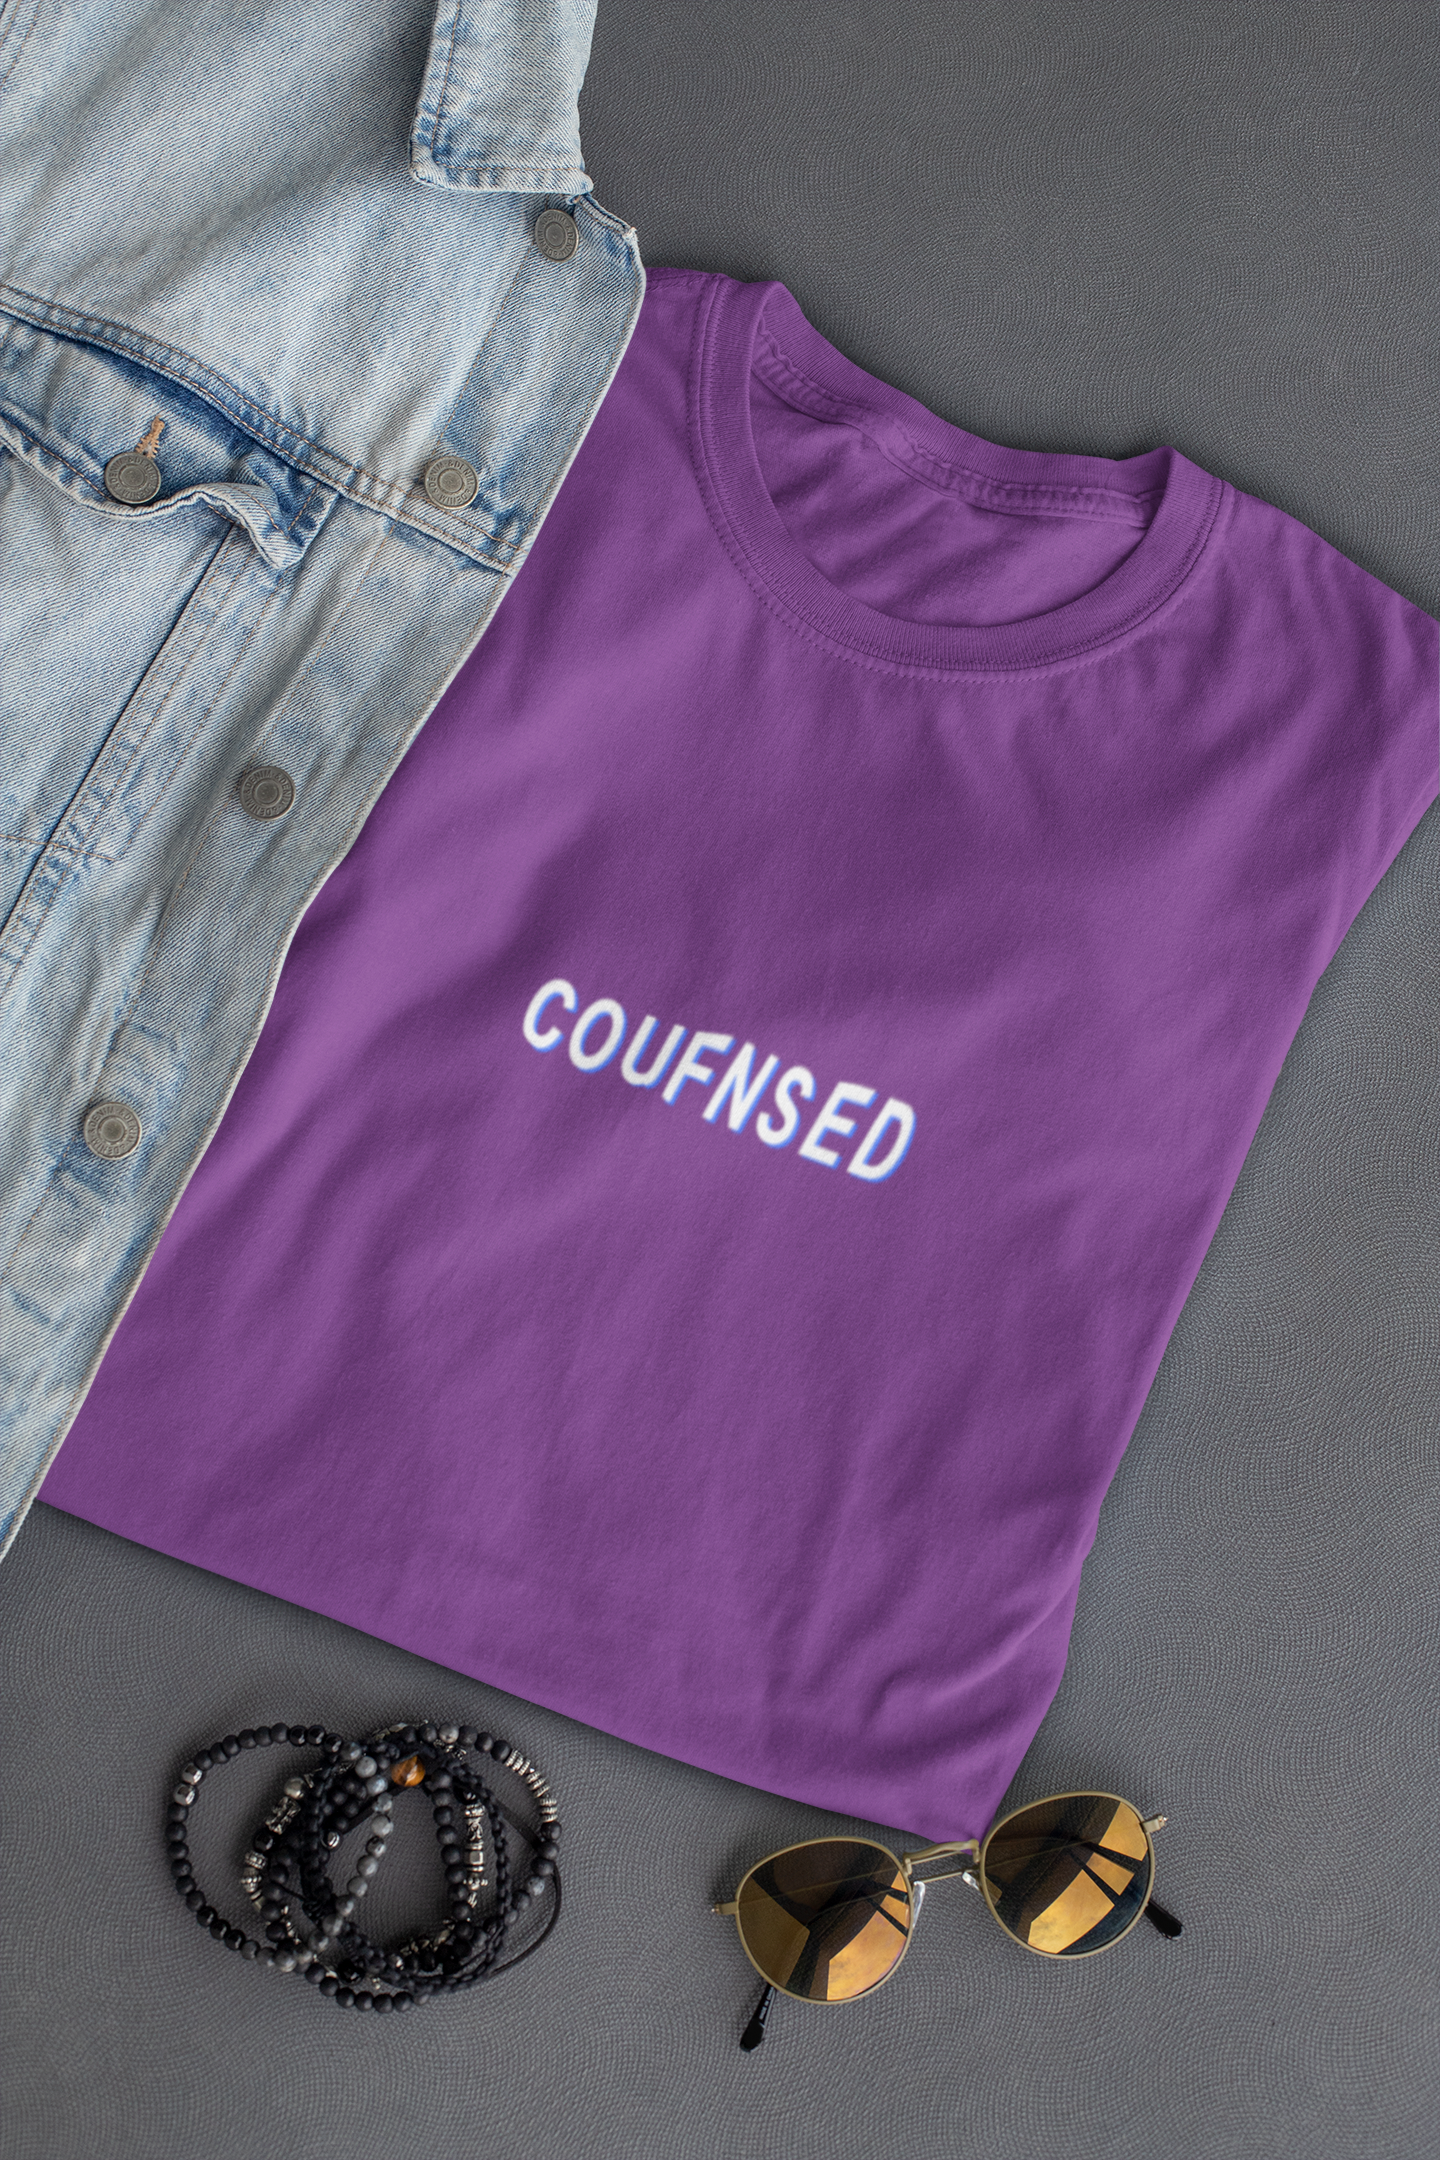 Confused Minimal Mens Half Sleeves T-shirt- FunkyTeesClub